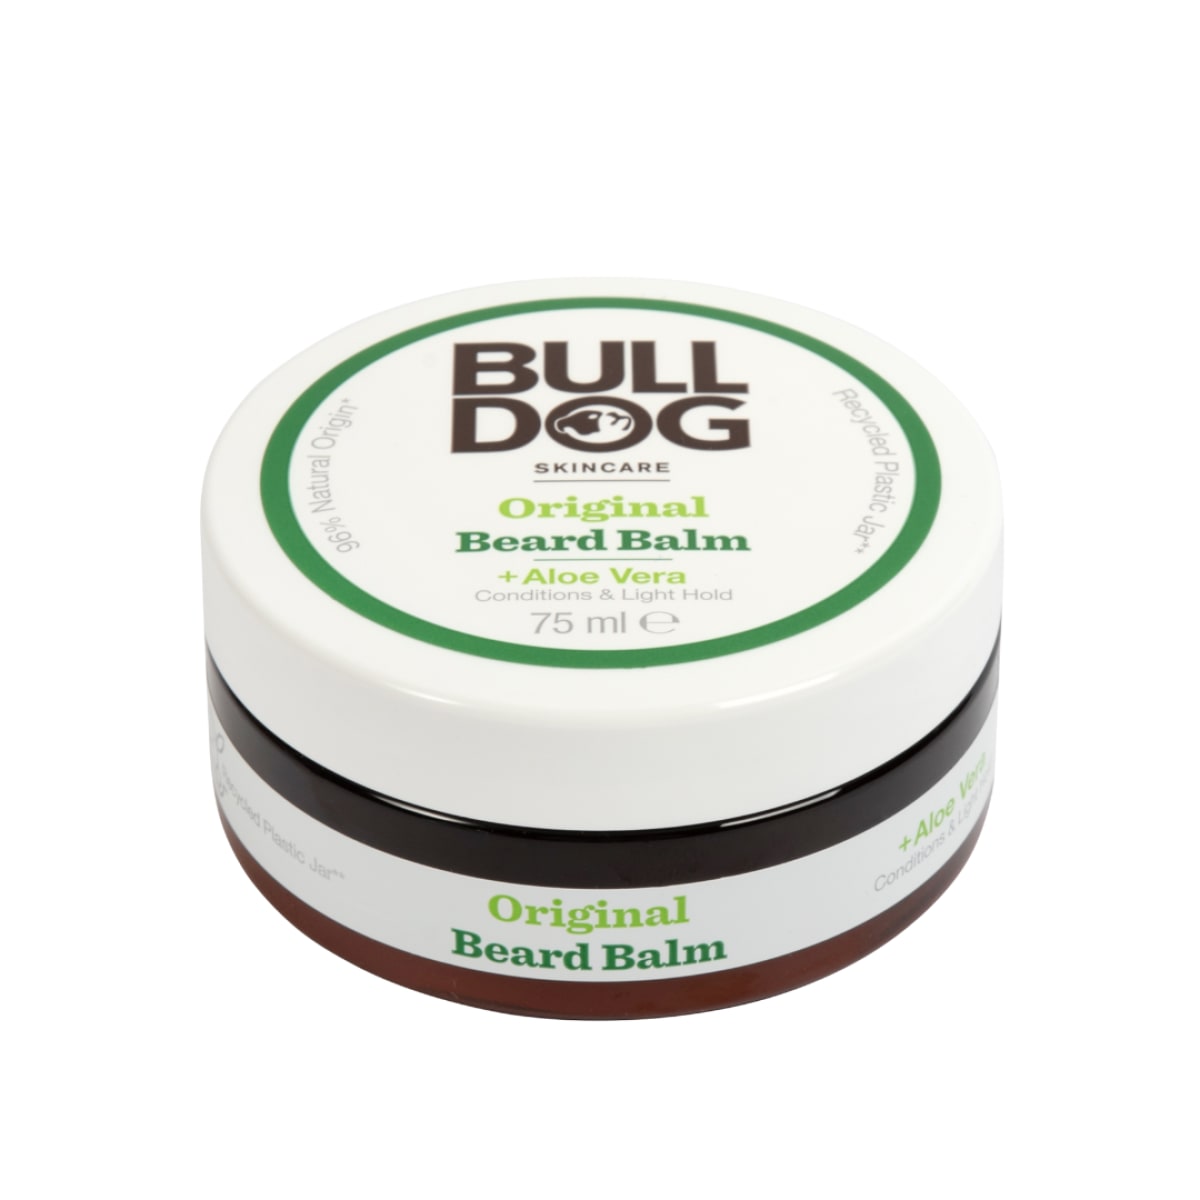 Bulldog Original Beard Balm